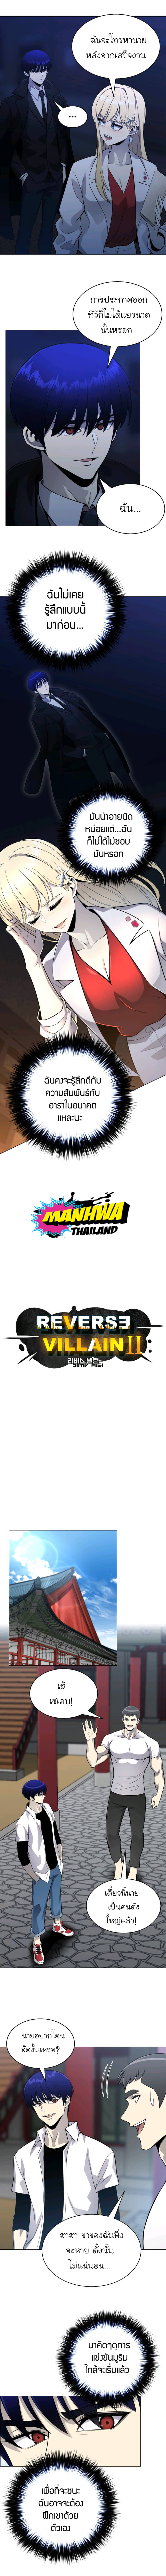 Reverse Villain 66 03